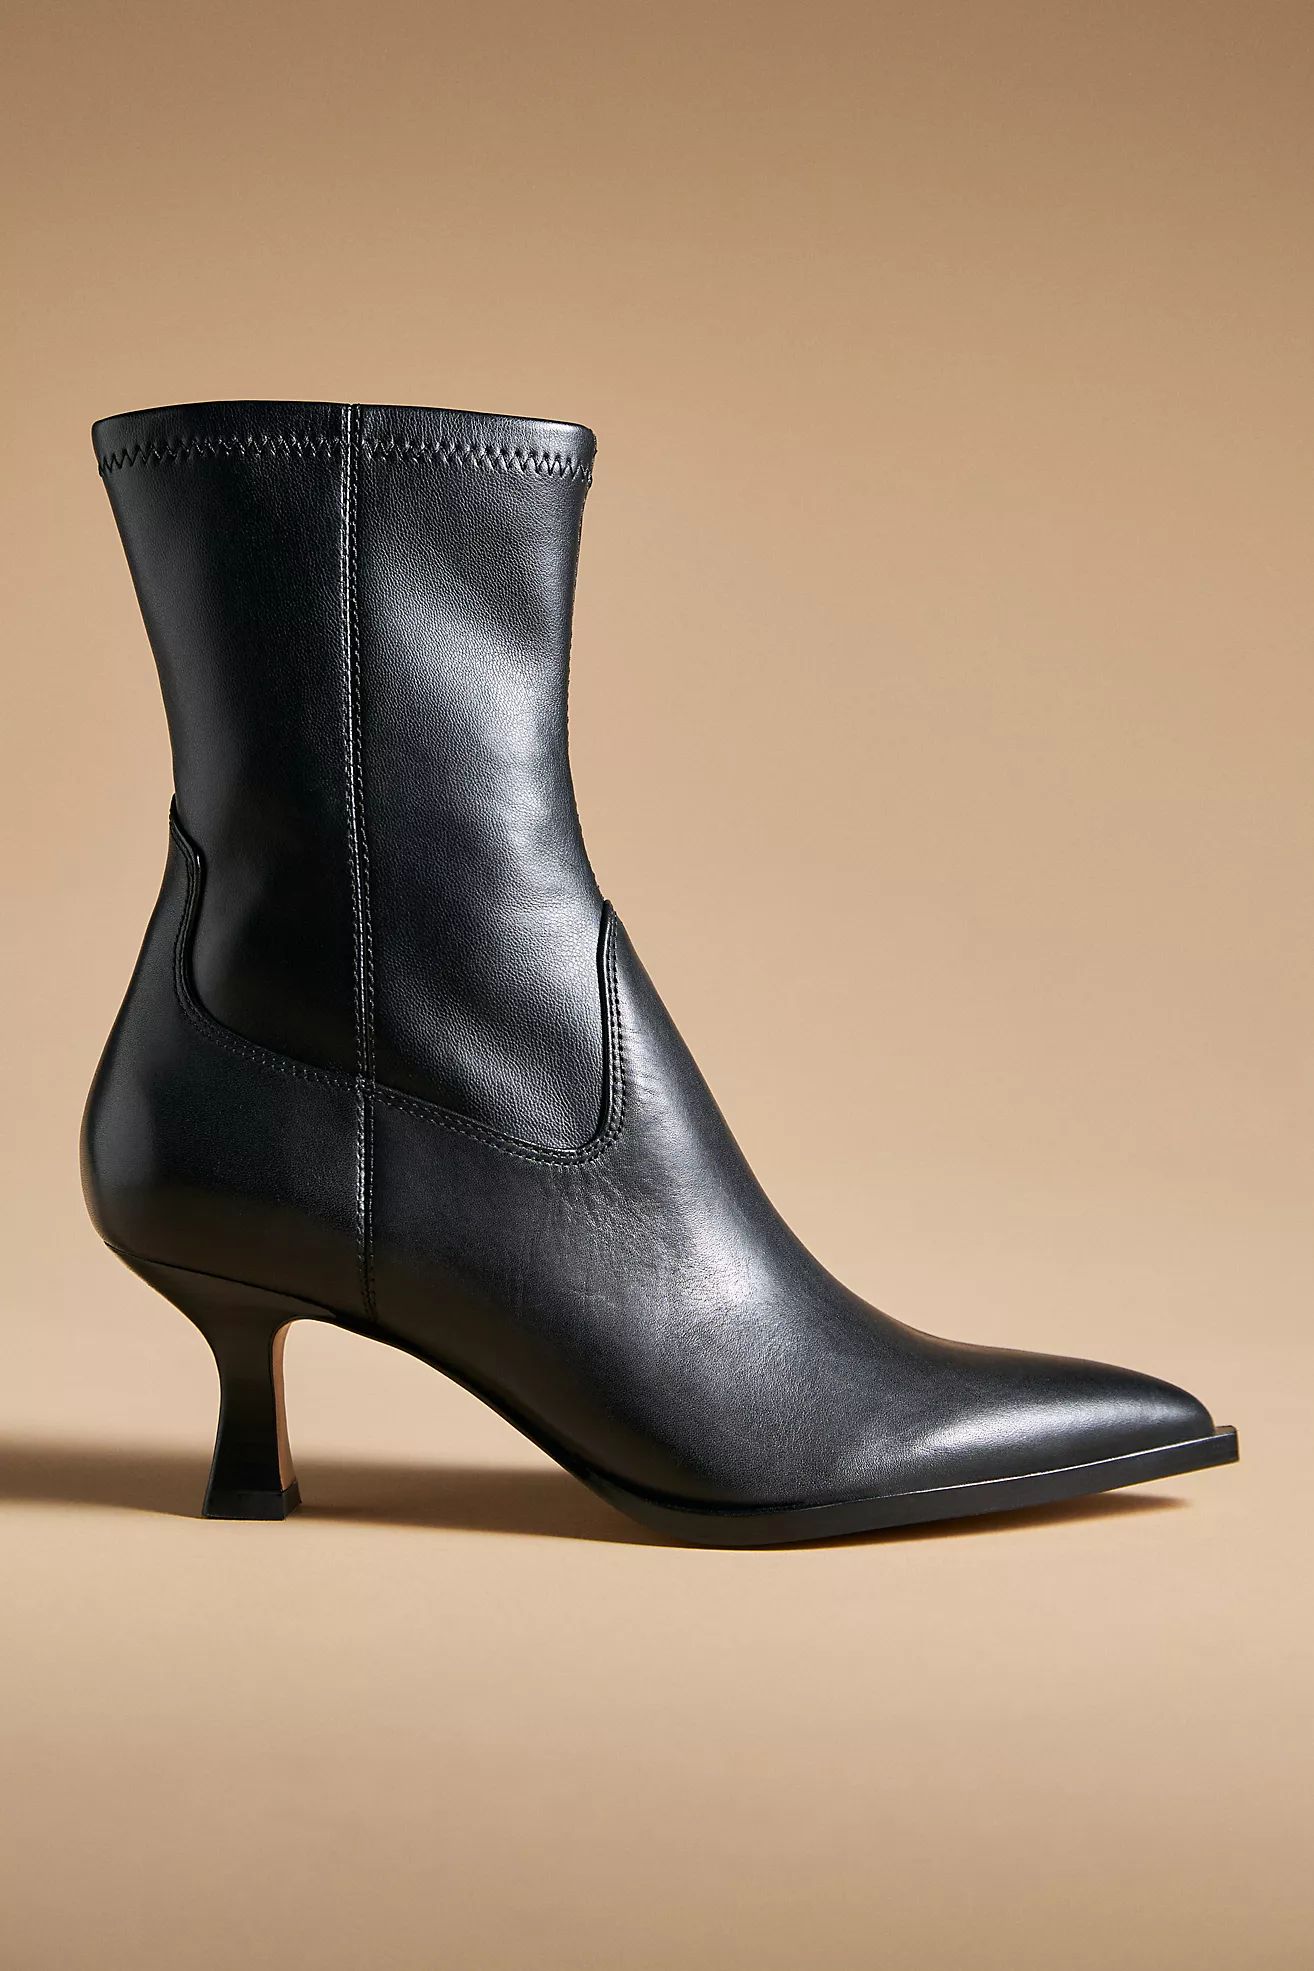 Dolce Vita Arya Kitten-Heel Boots | Anthropologie (US)